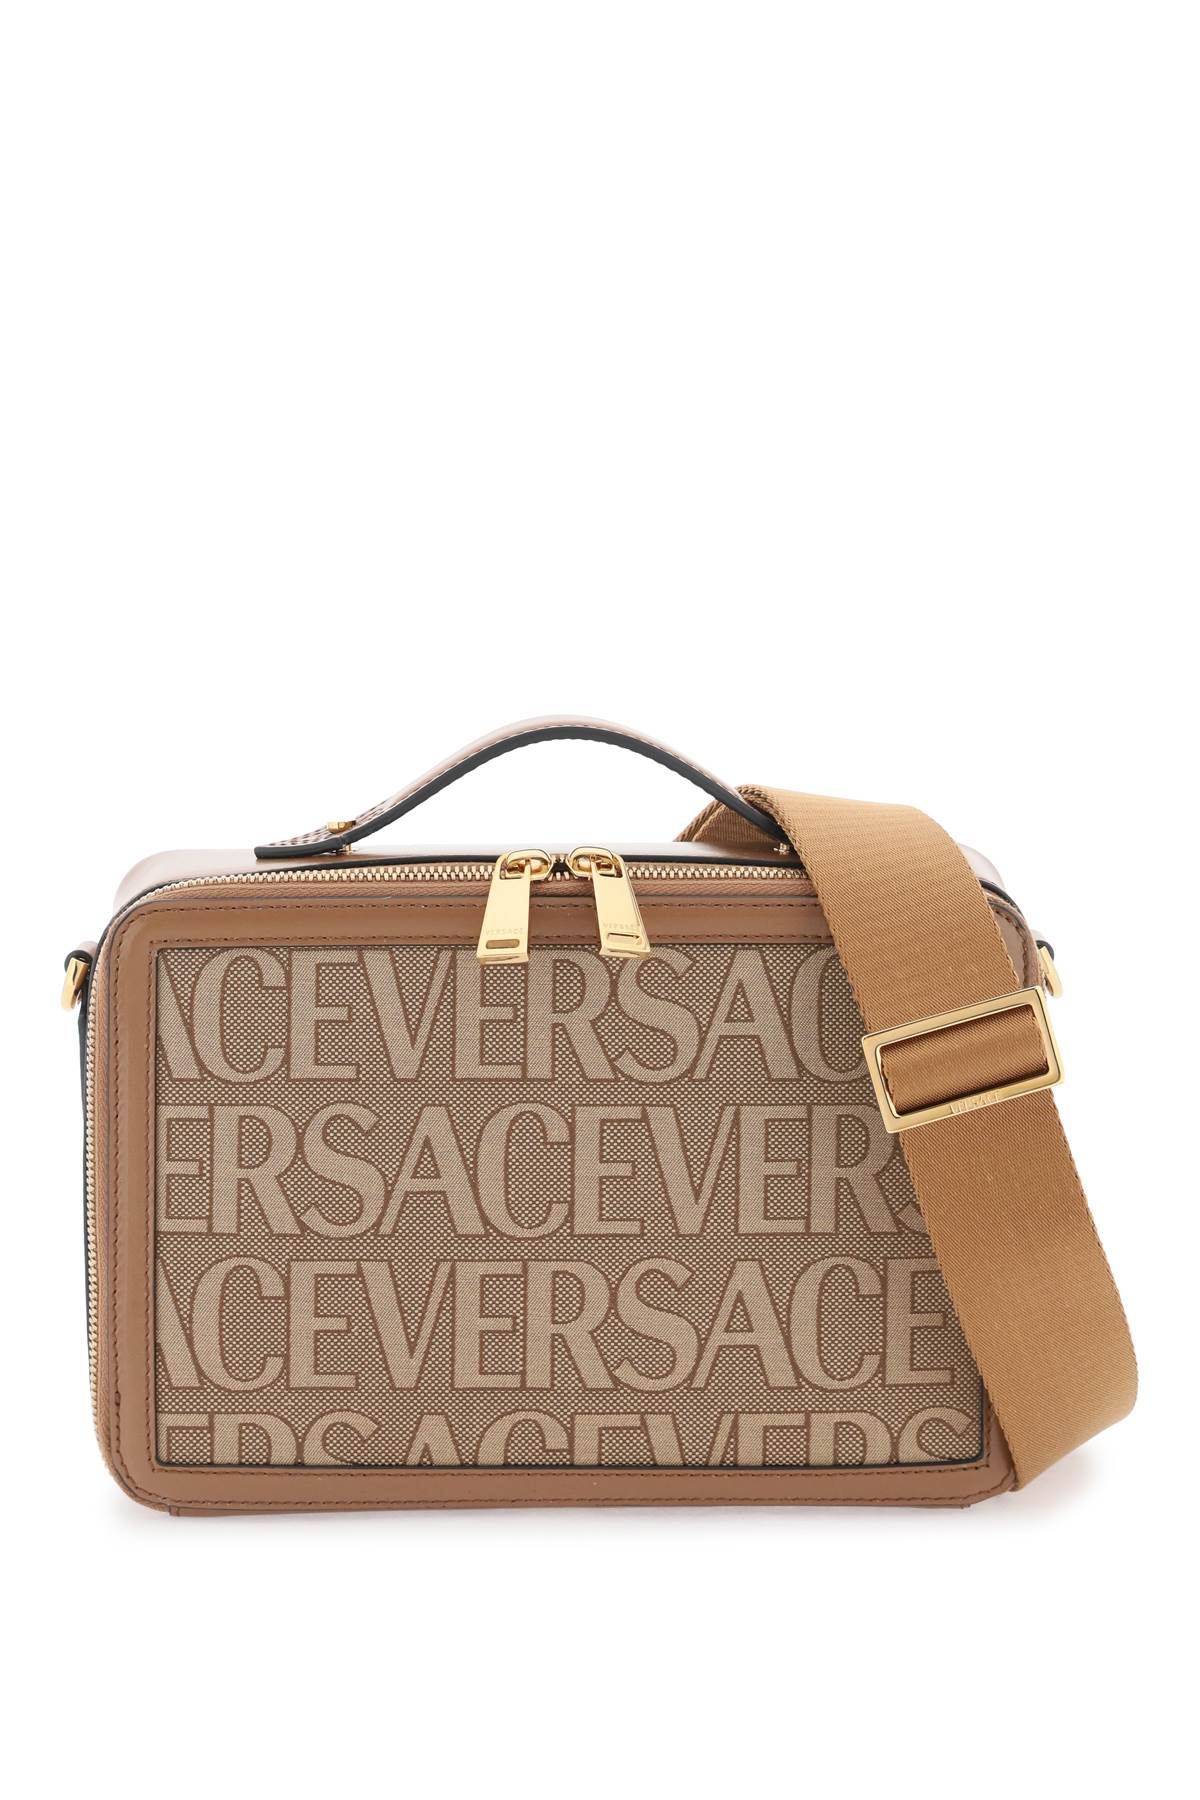 Versace Canvas Messenger Bag